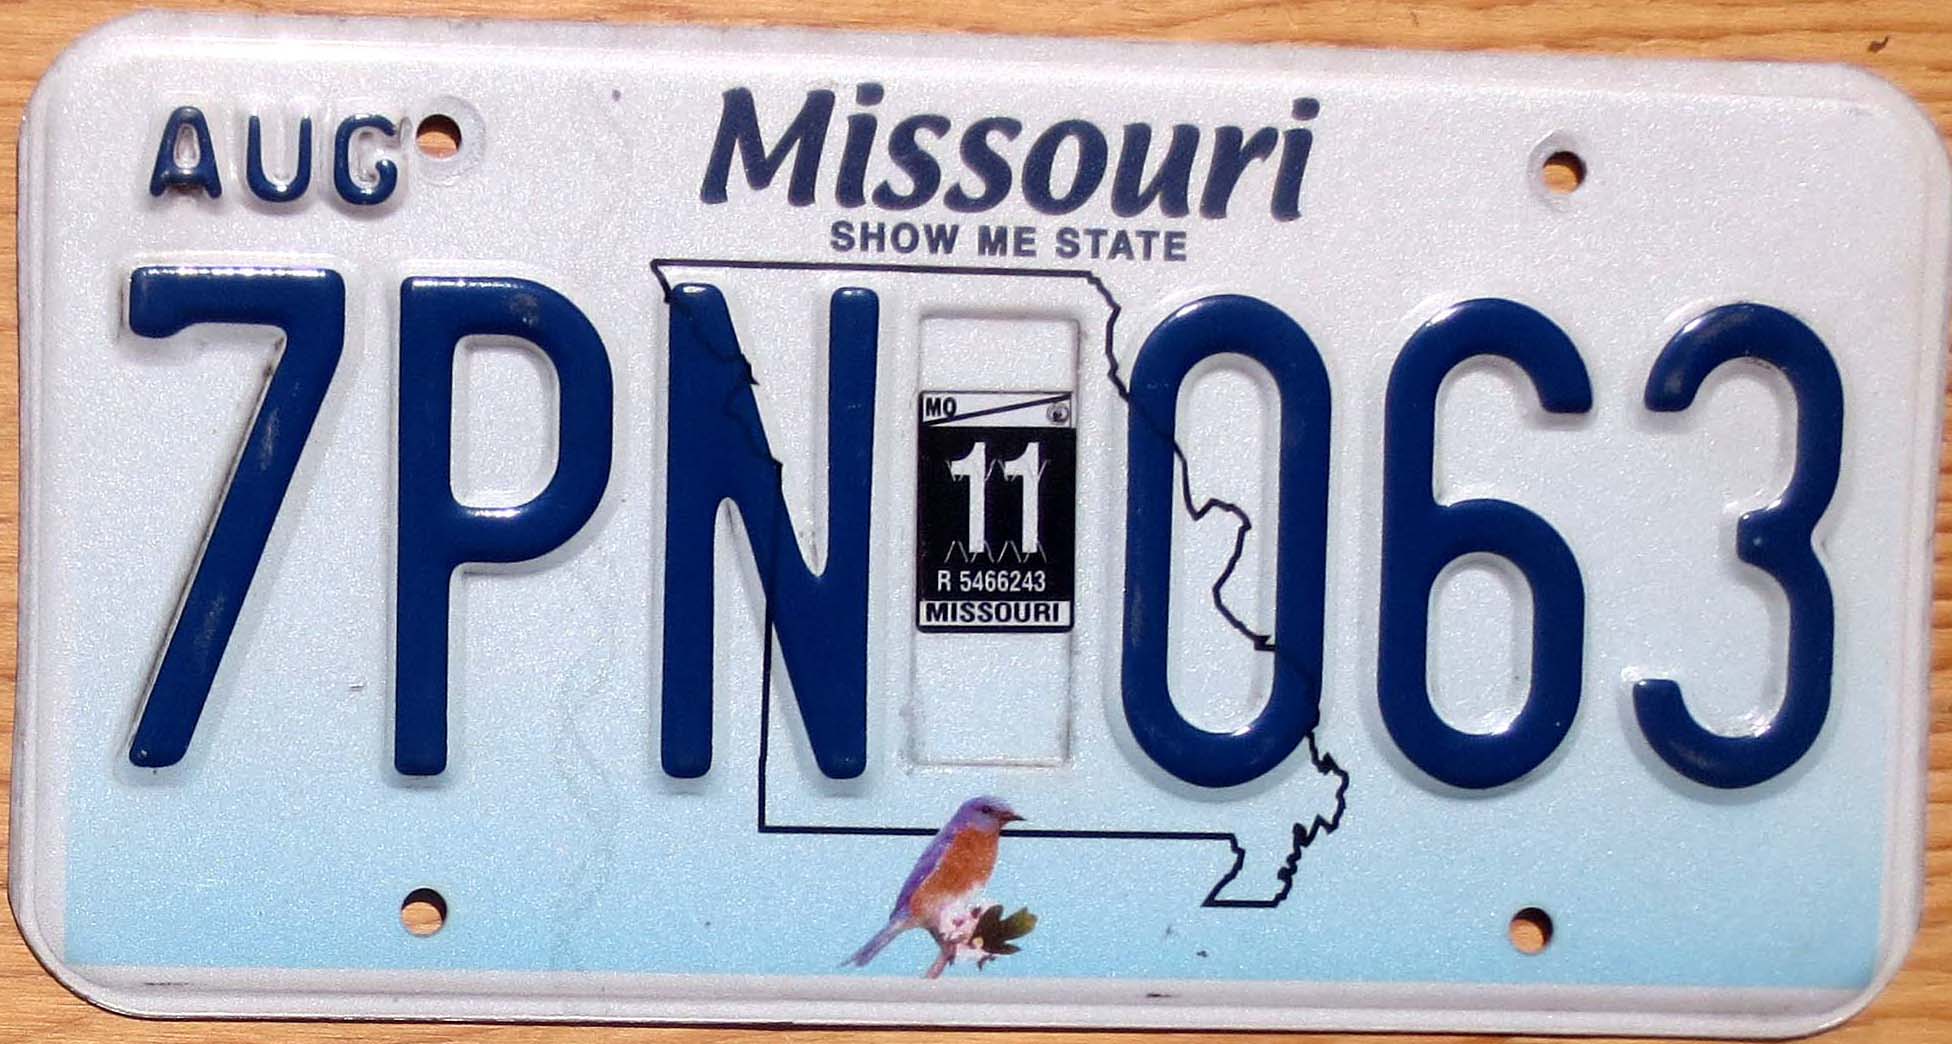 2011 Missouri vg+ Automobile License Plate Store Collectible License